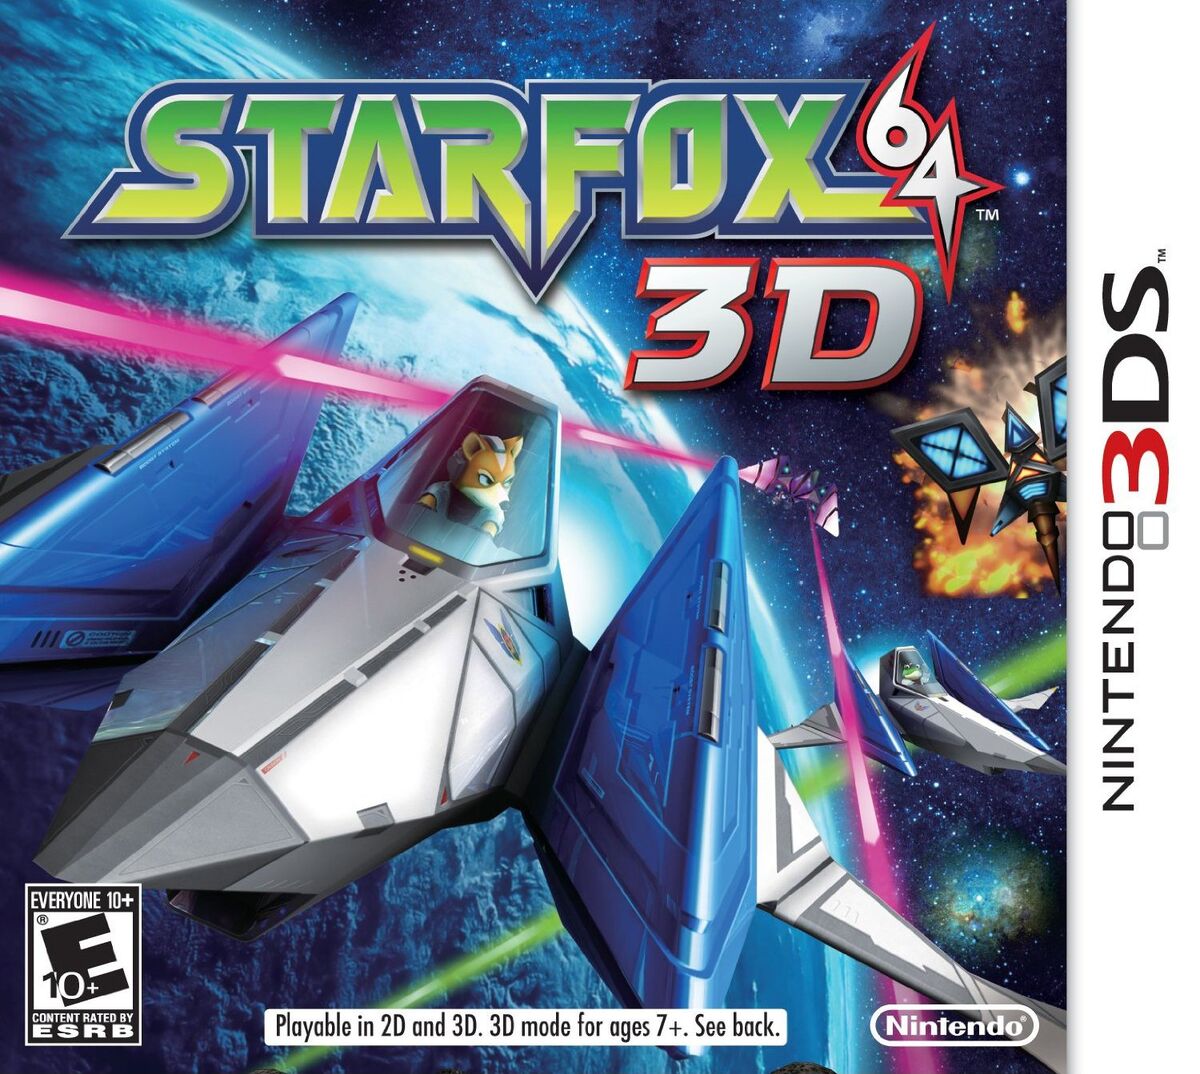 Star Fox 64 3D Soundtrack- Training 